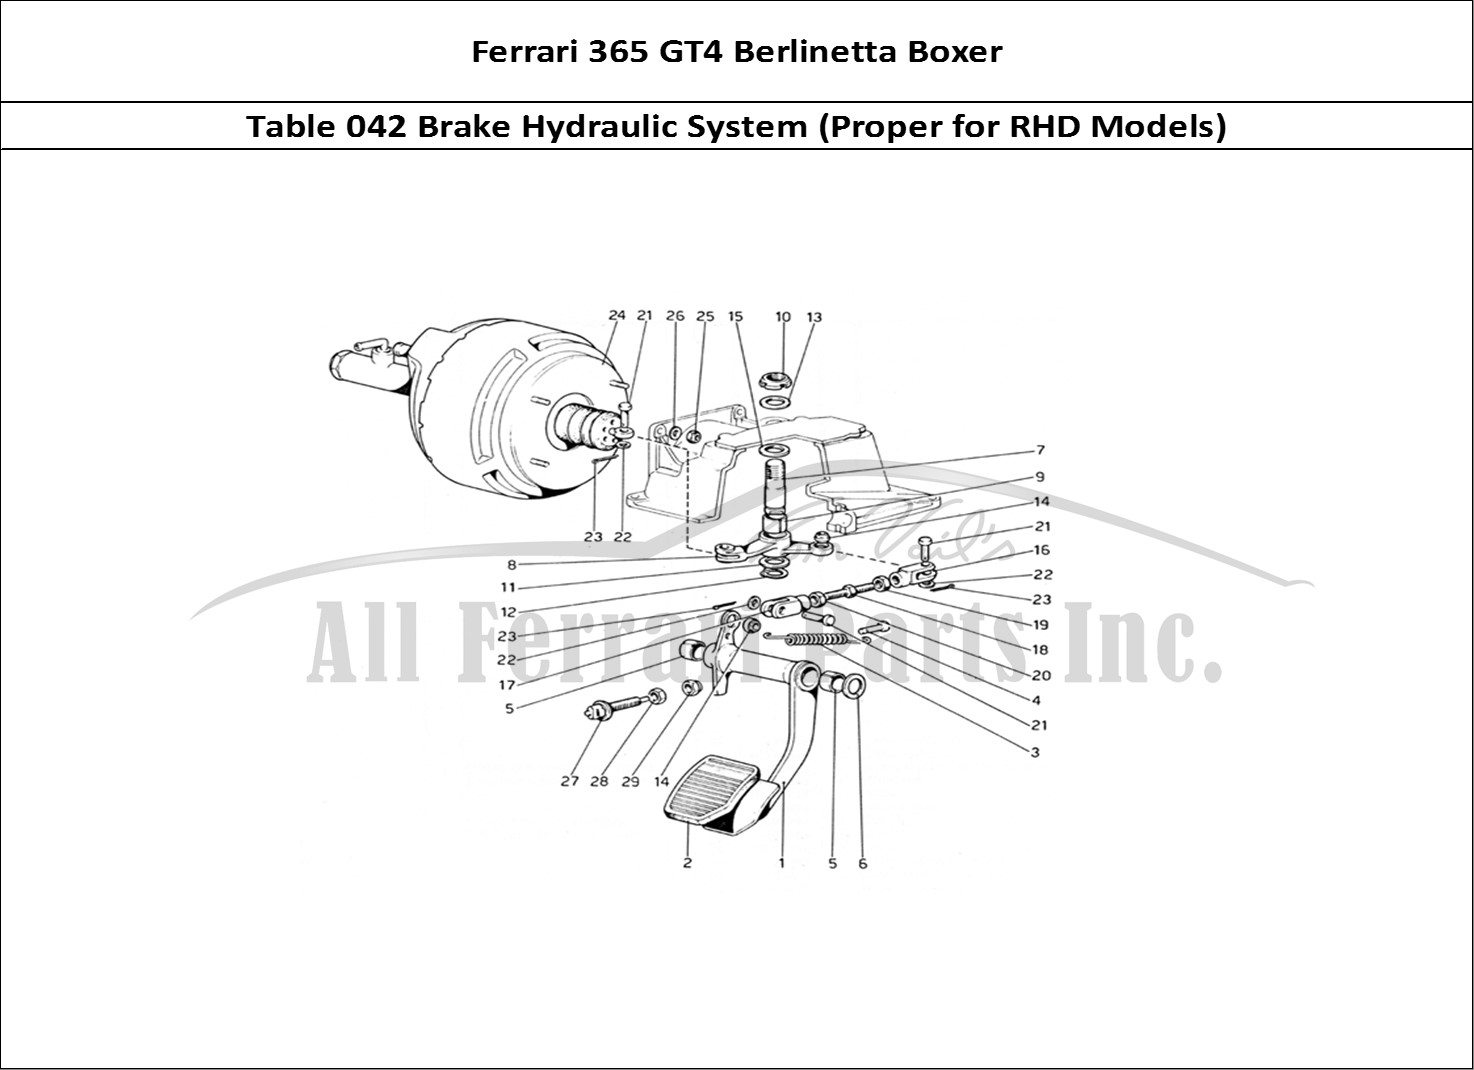 Ferrari Parts Ferrari 365 GT4 Berlinetta Boxer Page 042 Brake Hydraulic System (V